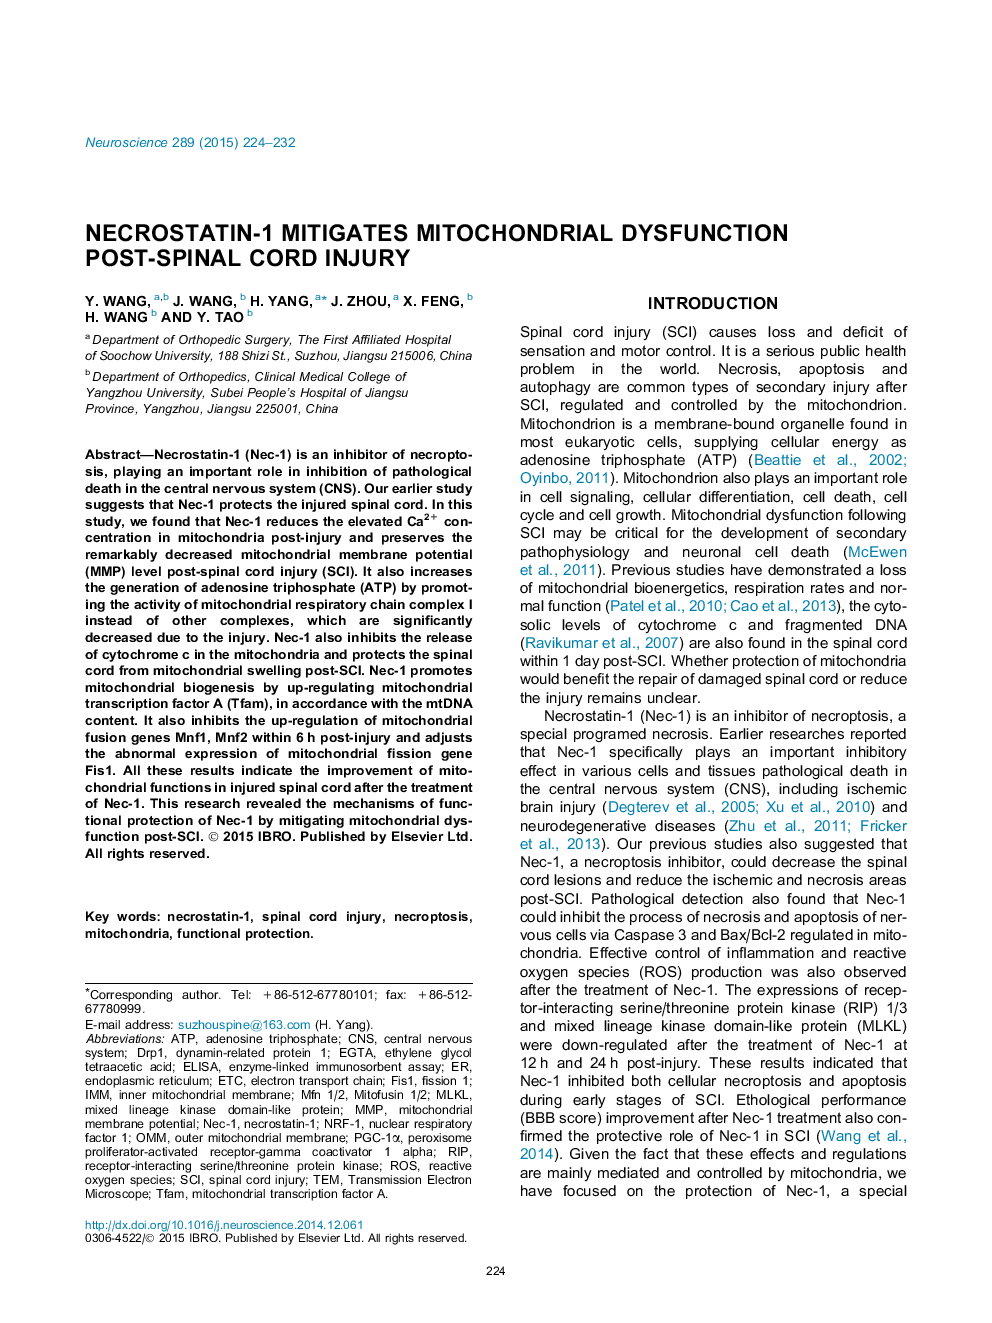 Necrostatin-1 mitigates mitochondrial dysfunction post-spinal cord injury